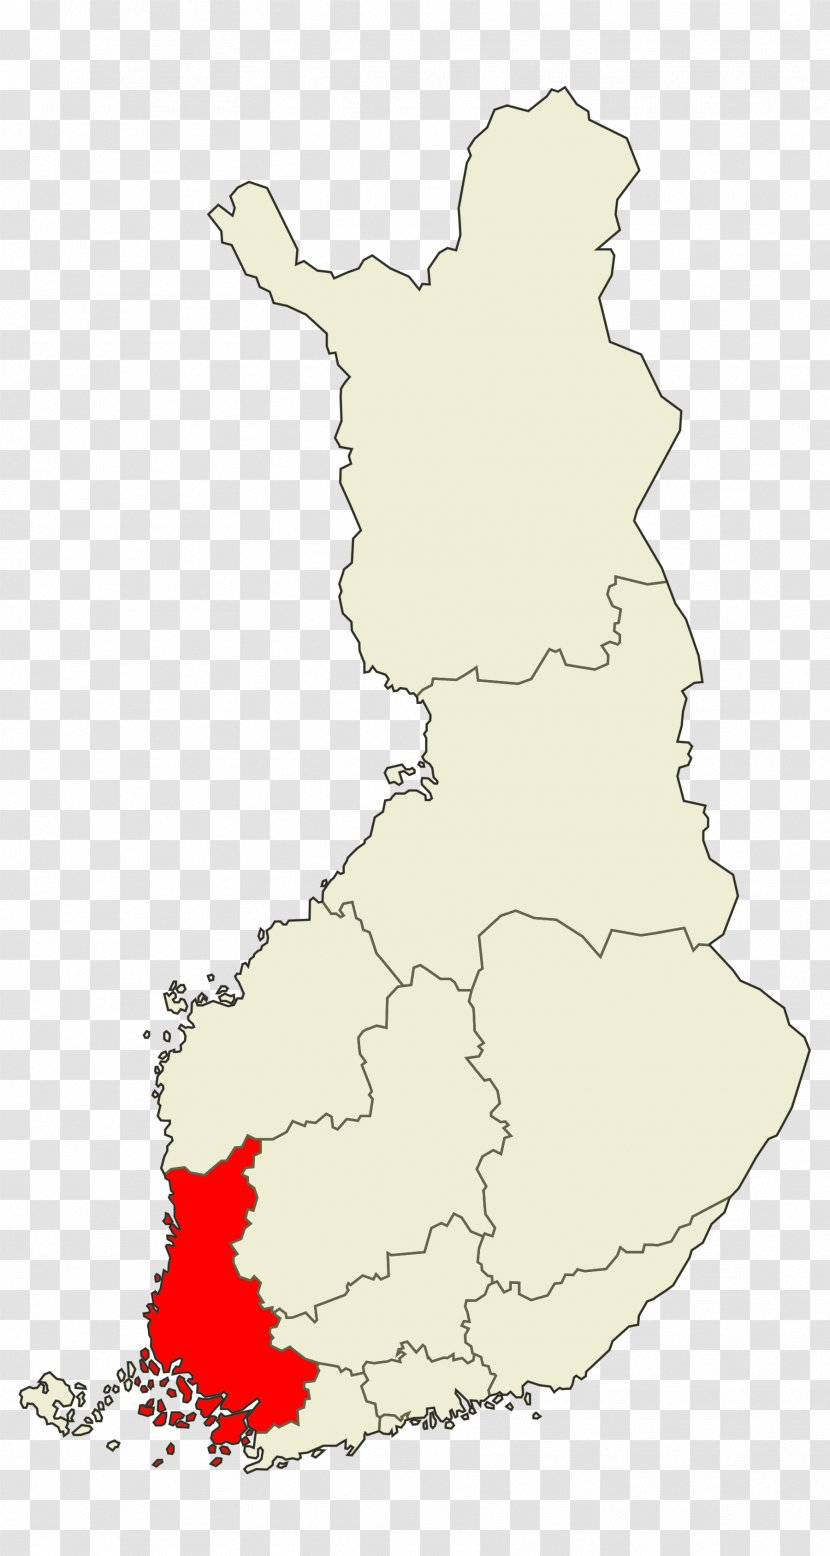 Central Finland Pargas Pukkila Sub-regions Of City - Subregions Transparent PNG